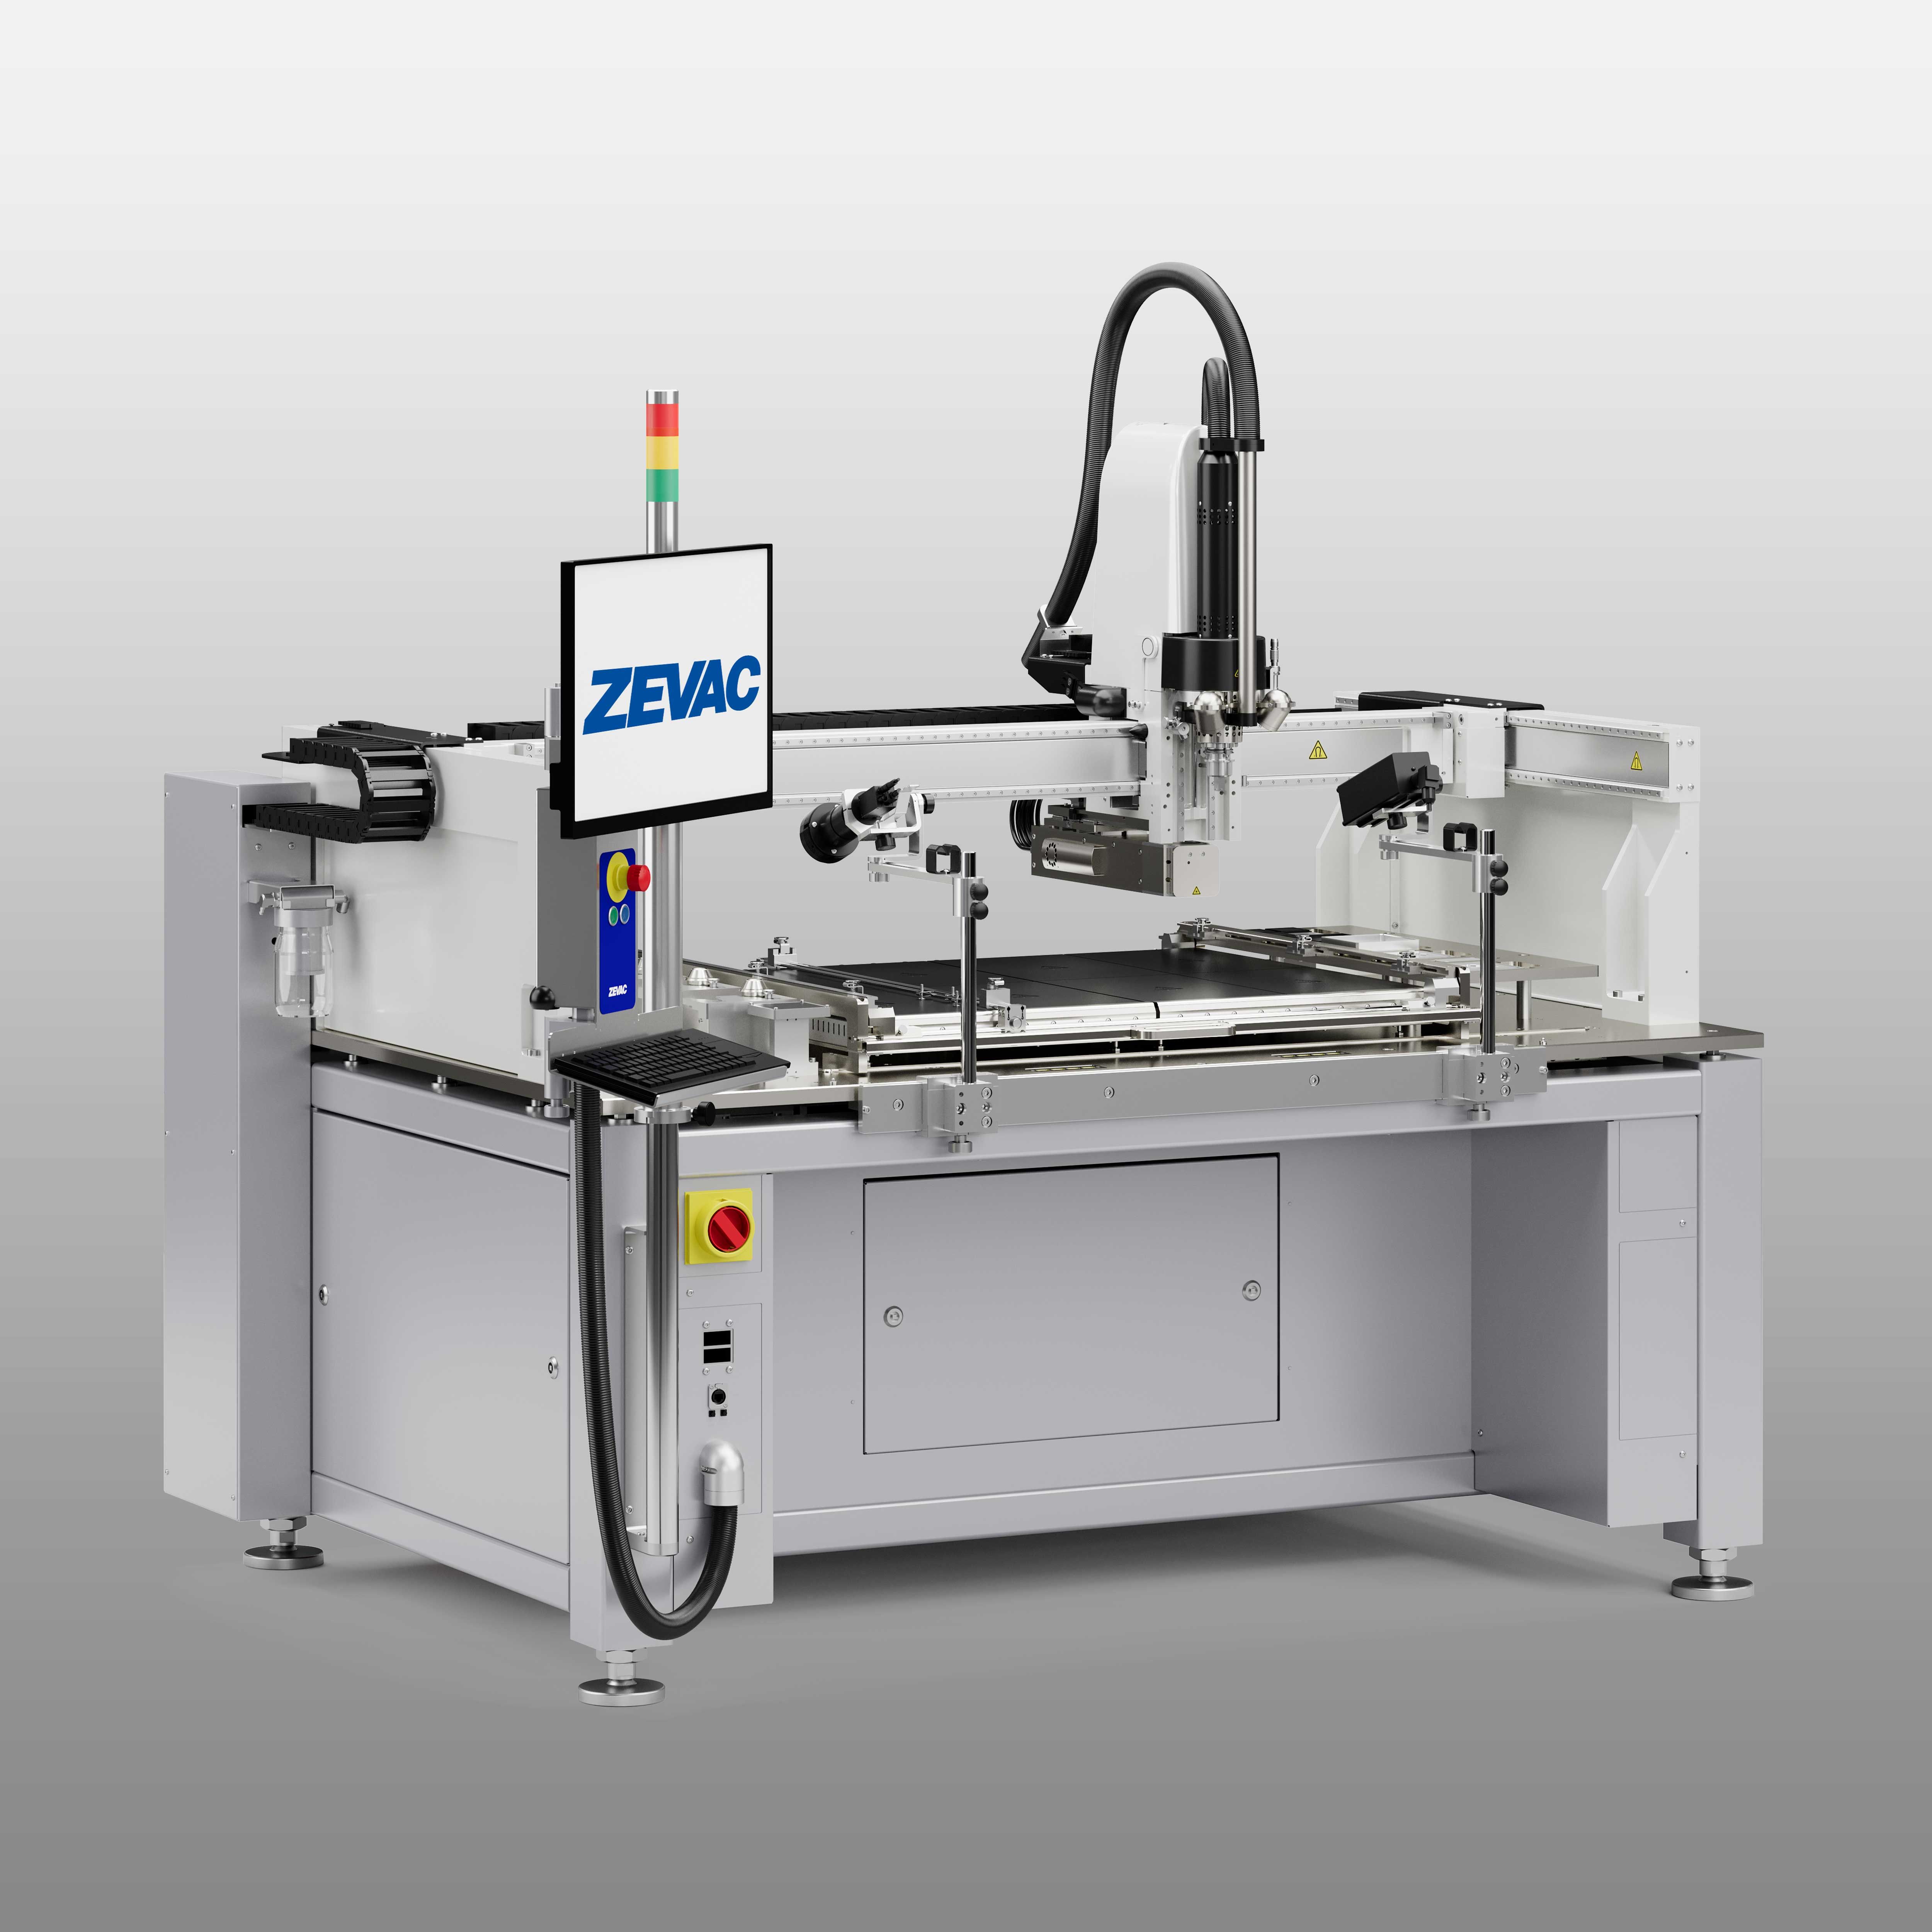 Zevac Products Machine Fully automatic IC-900 